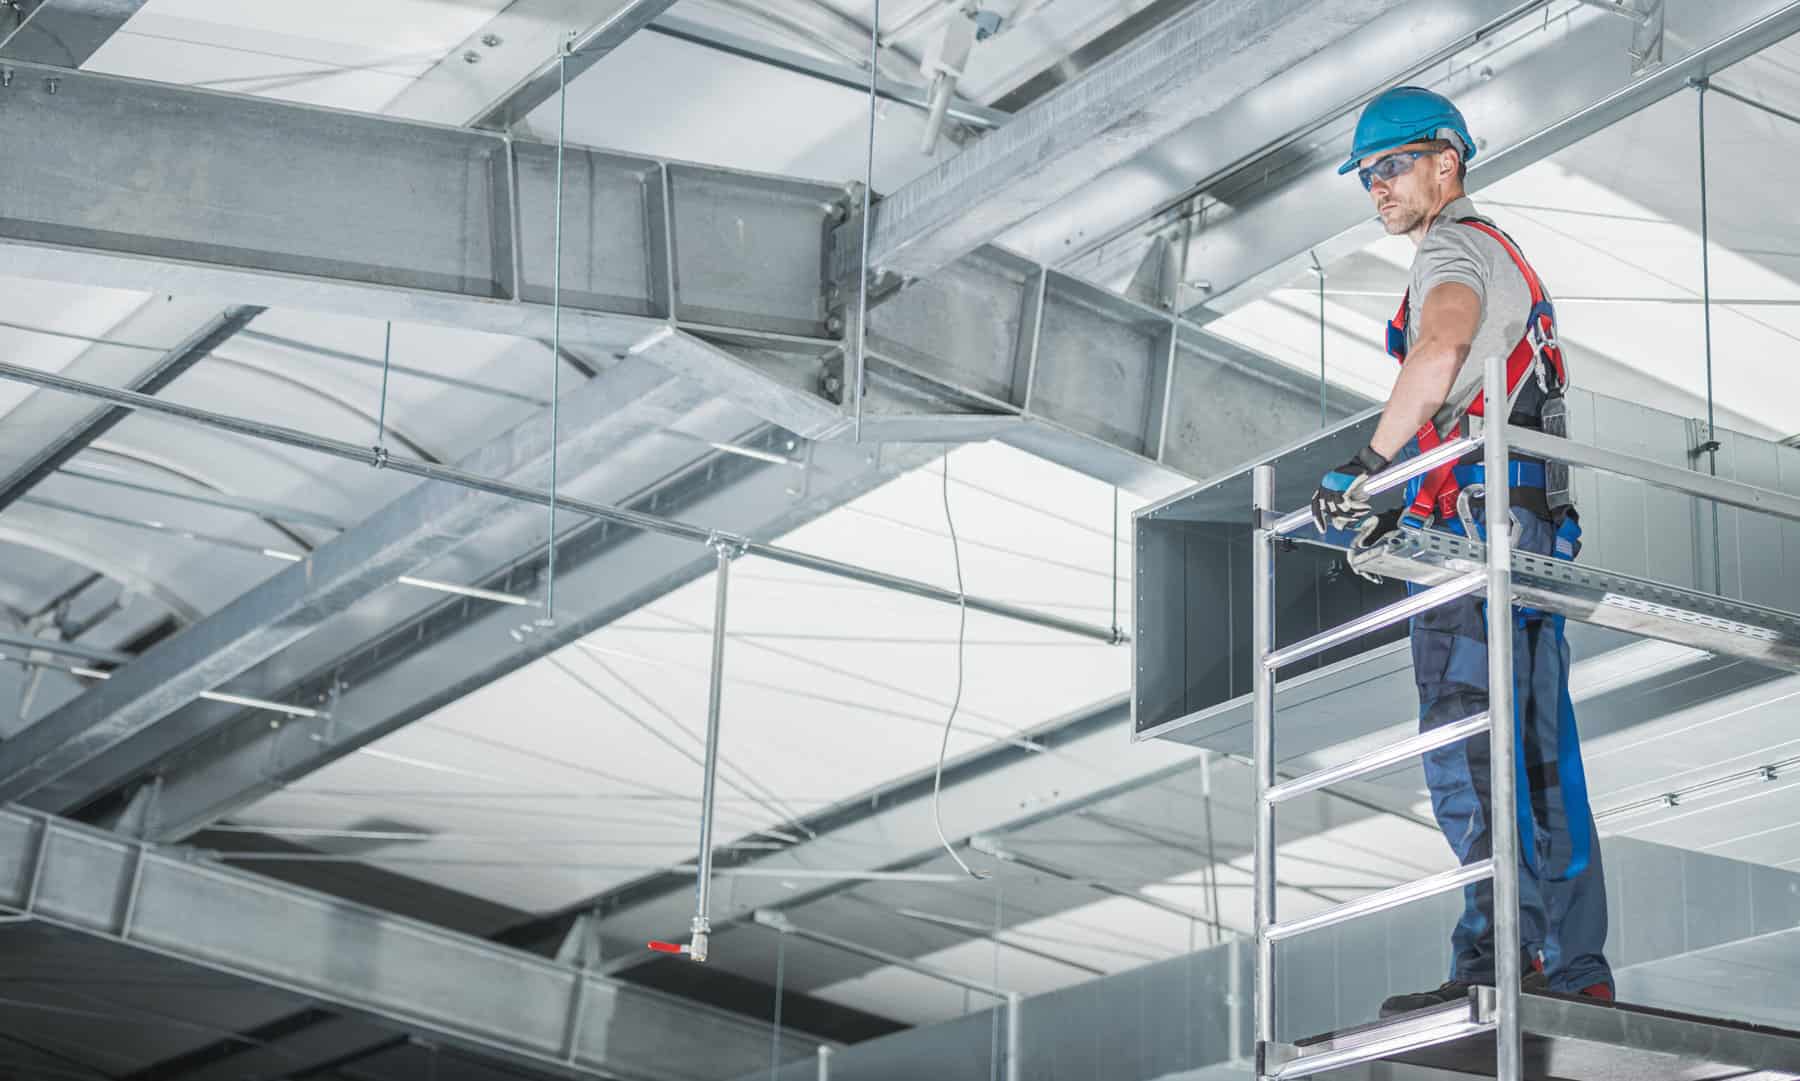 HVAC Technologies Warehouse Air Circulation Installer on Aluminium Scaffolding Preparing to Make Final Air Vents Adjustments.